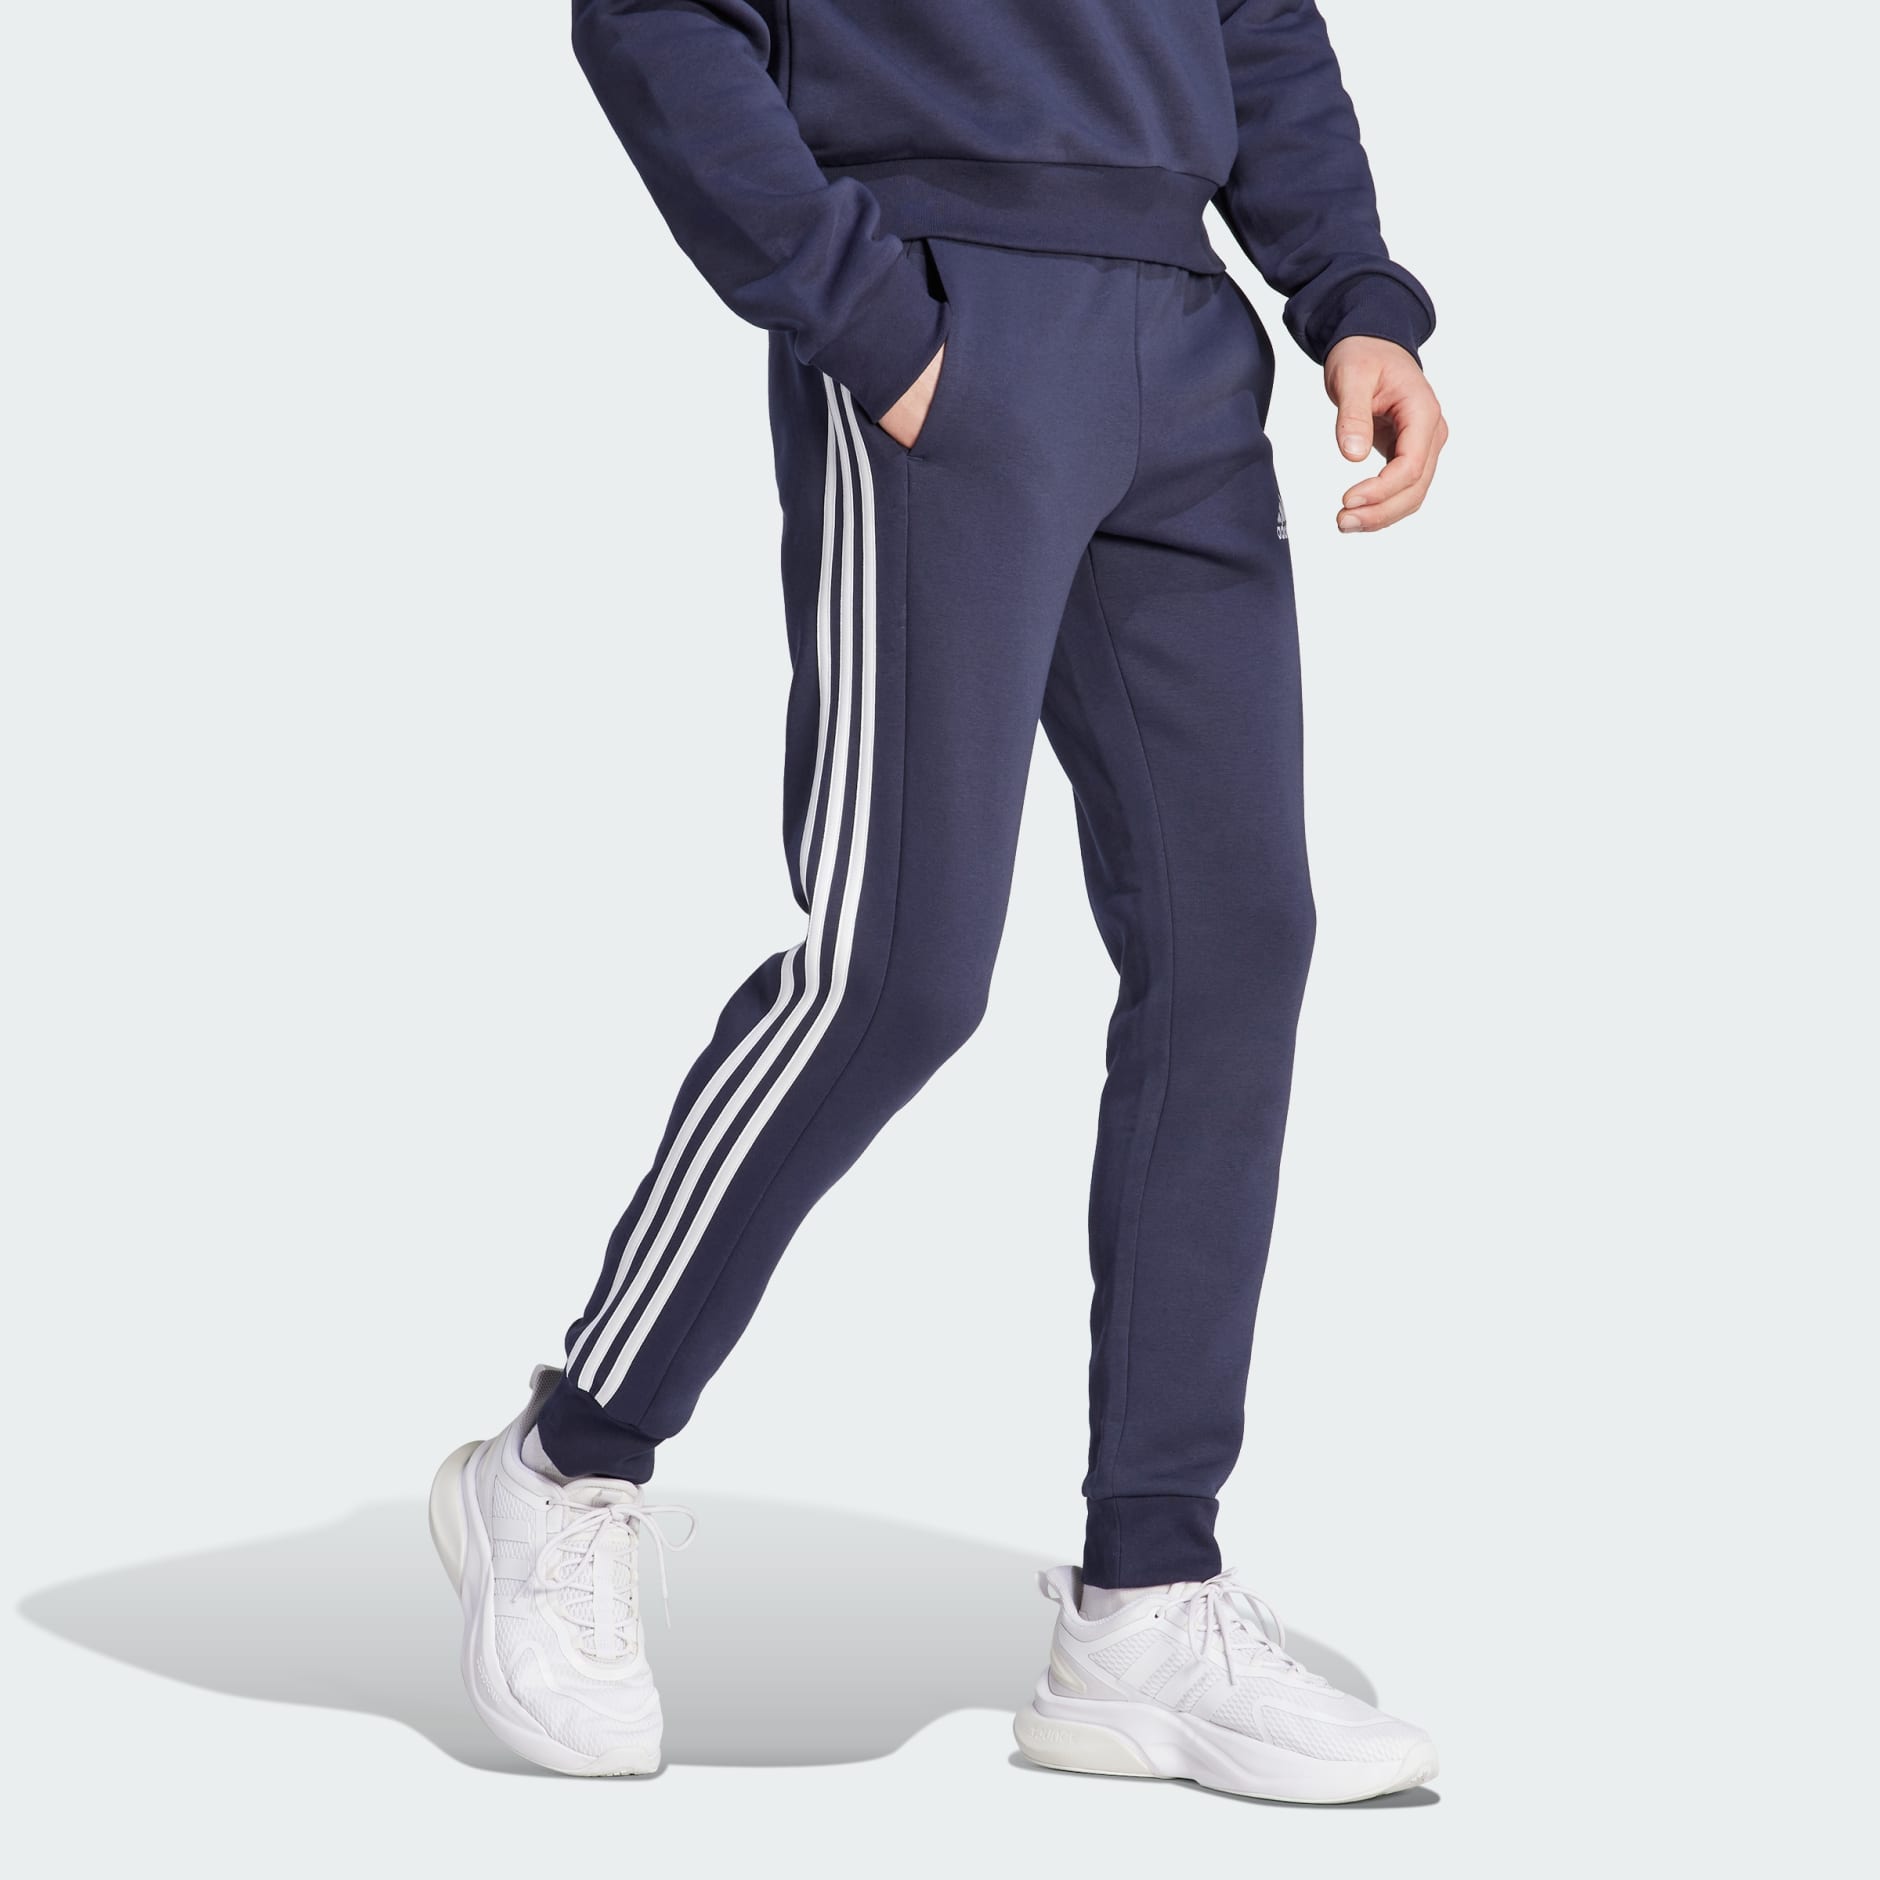 adidas Essentials Fleece 3-Stripes Tapered Cuff Pants - Blue | adidas UAE